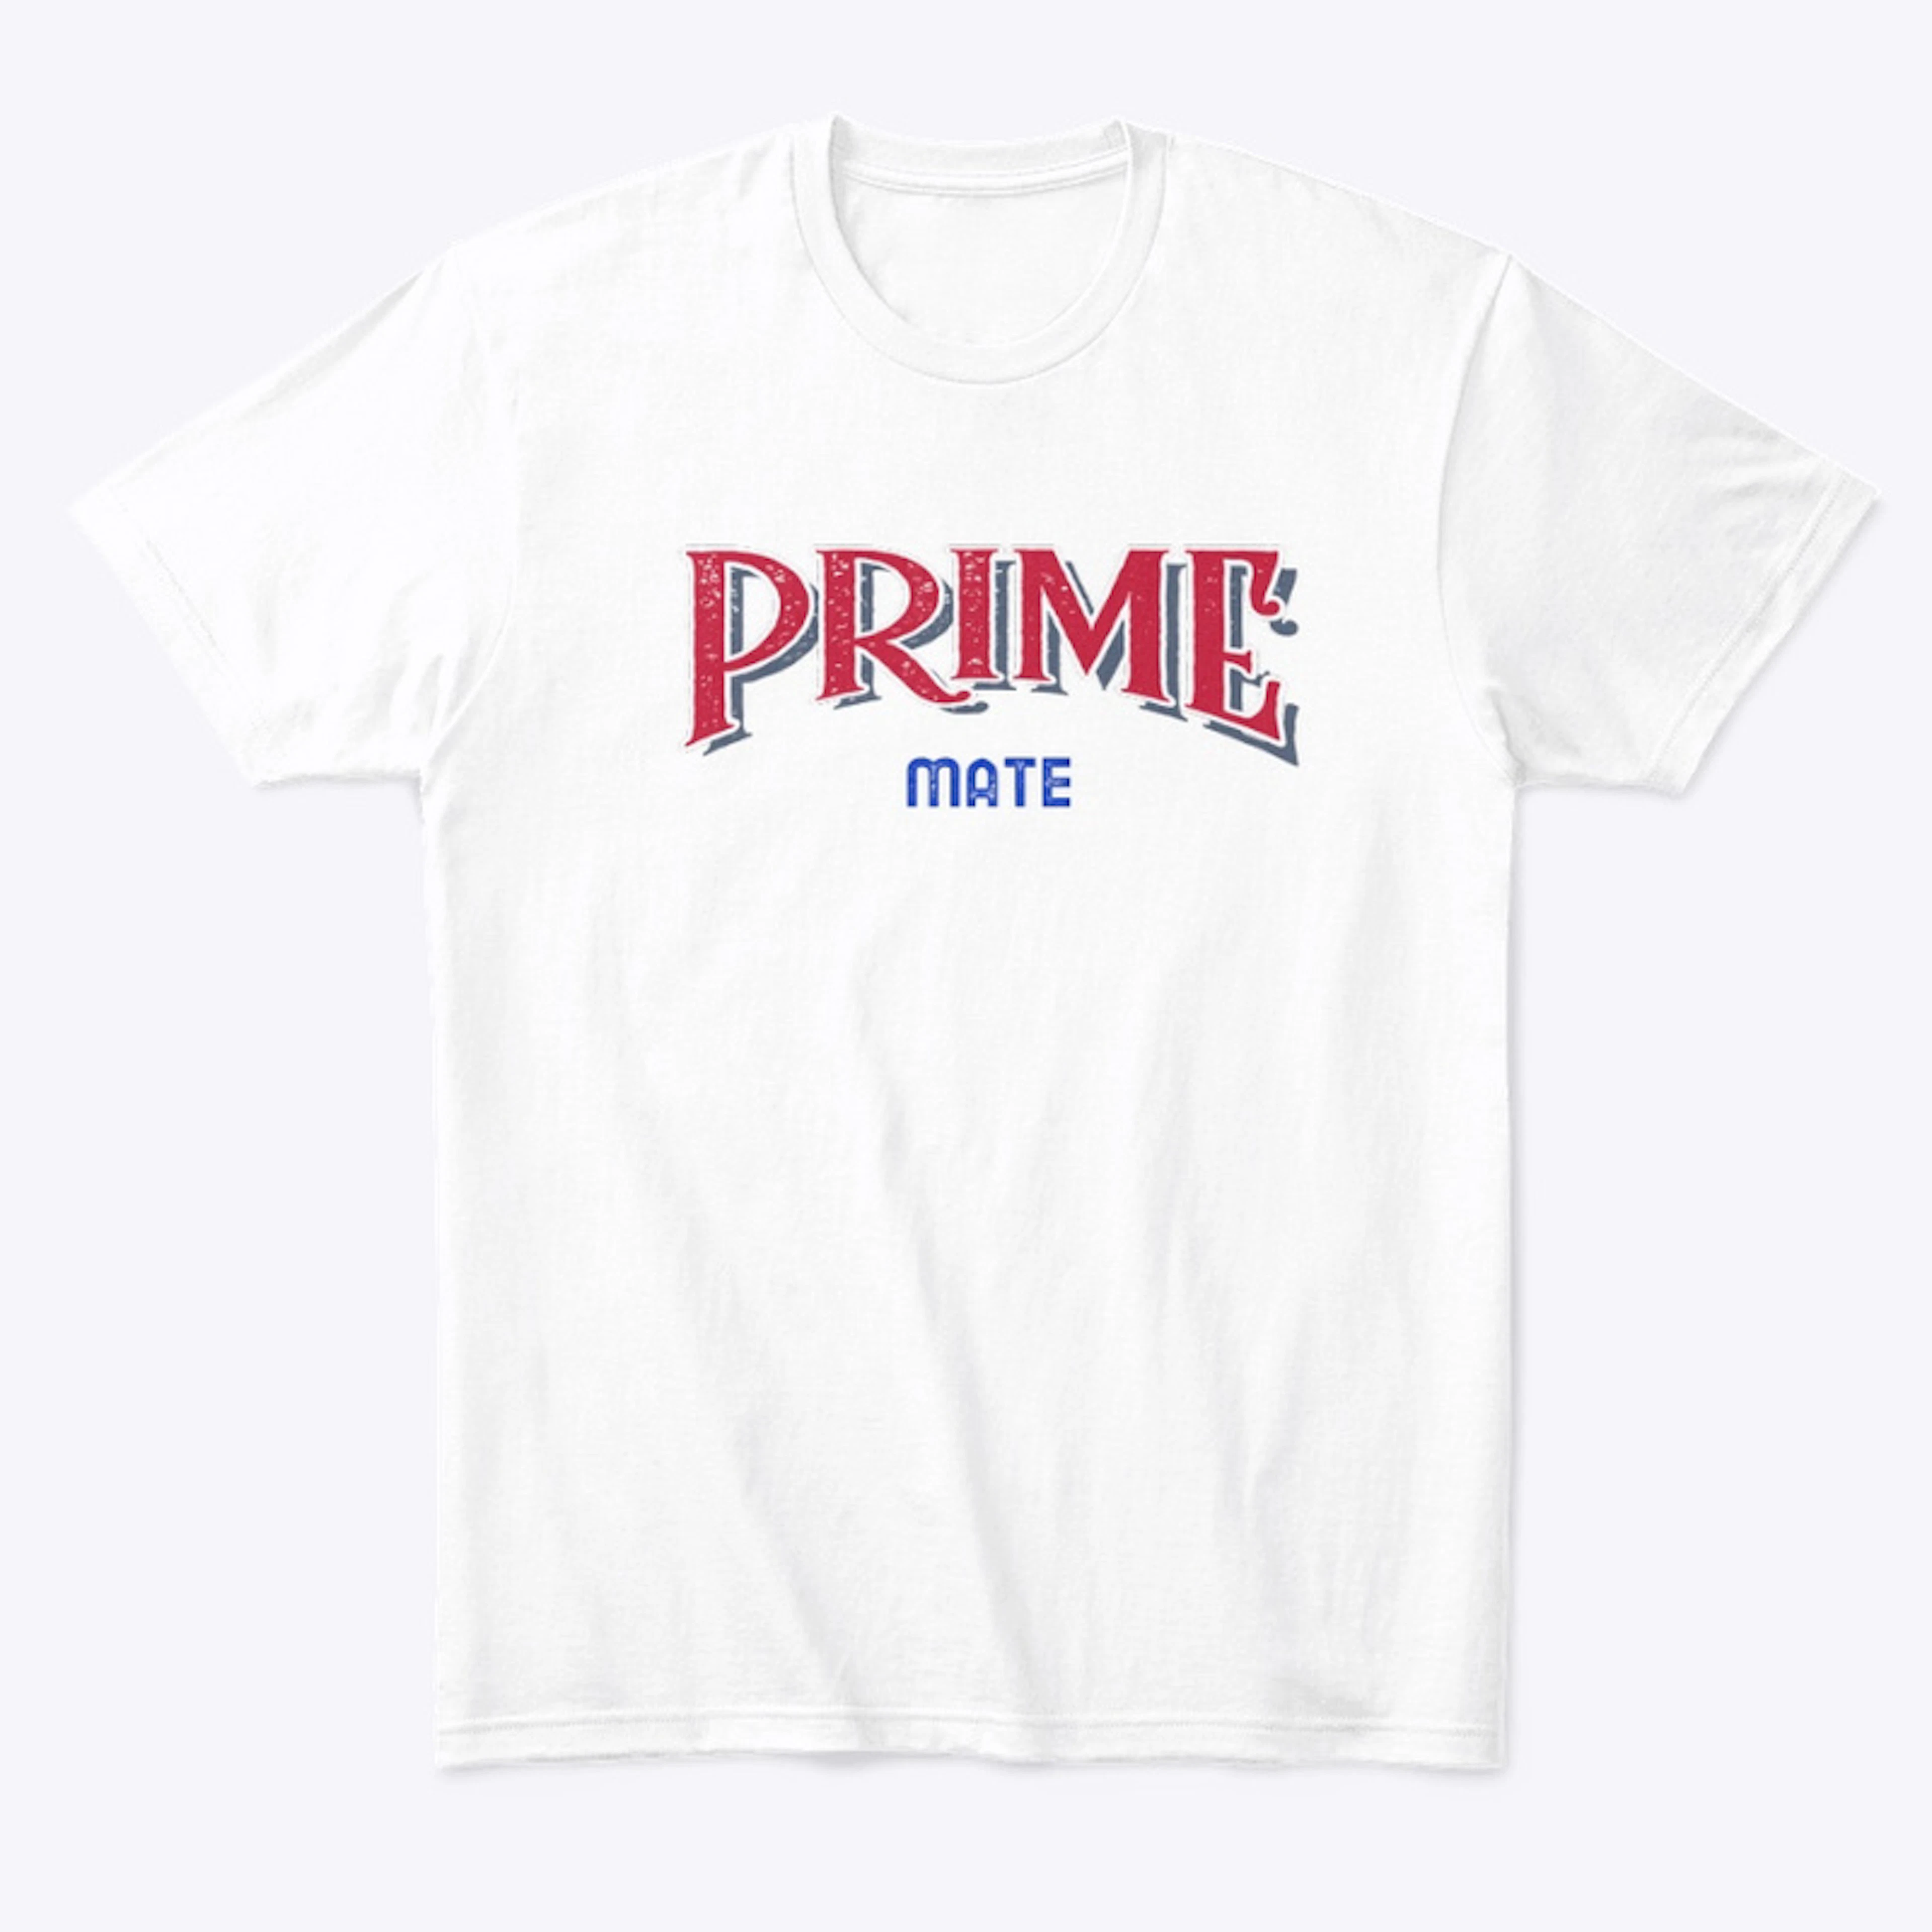 Prime mate apparel.